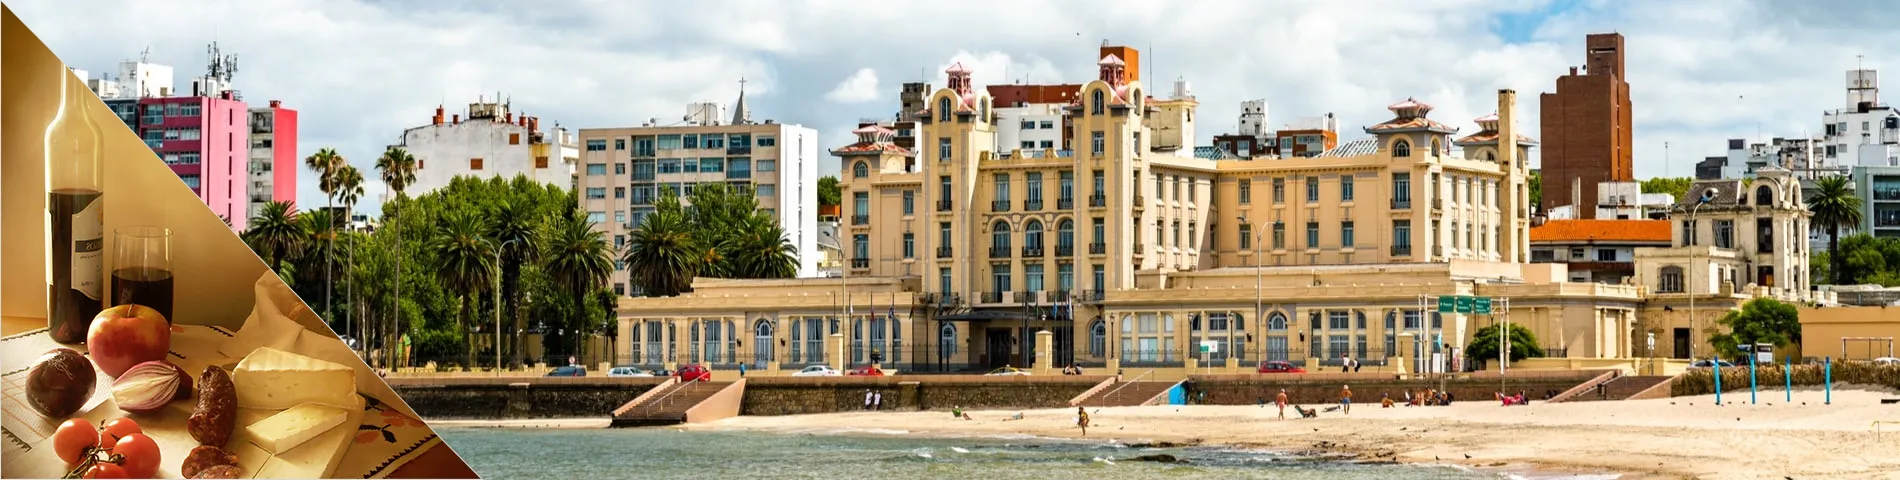 Montevideo - Spagnolo & Cultura